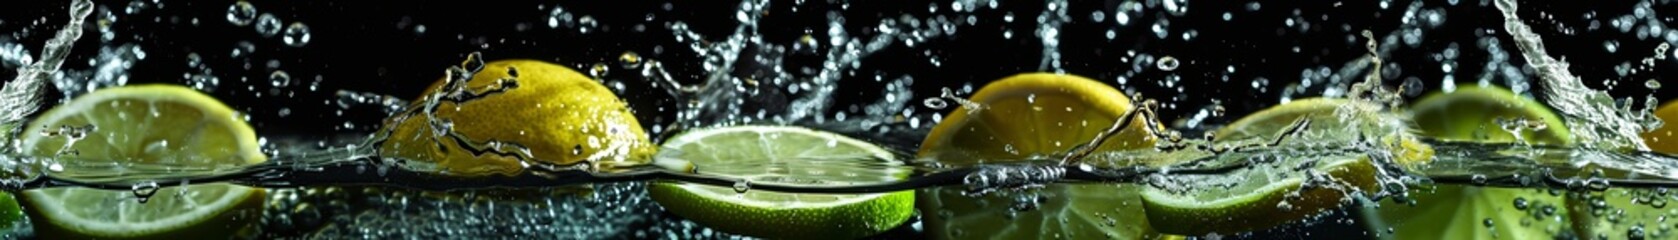 Lemon and lime water splash vibrant citrus close up dynamic motion